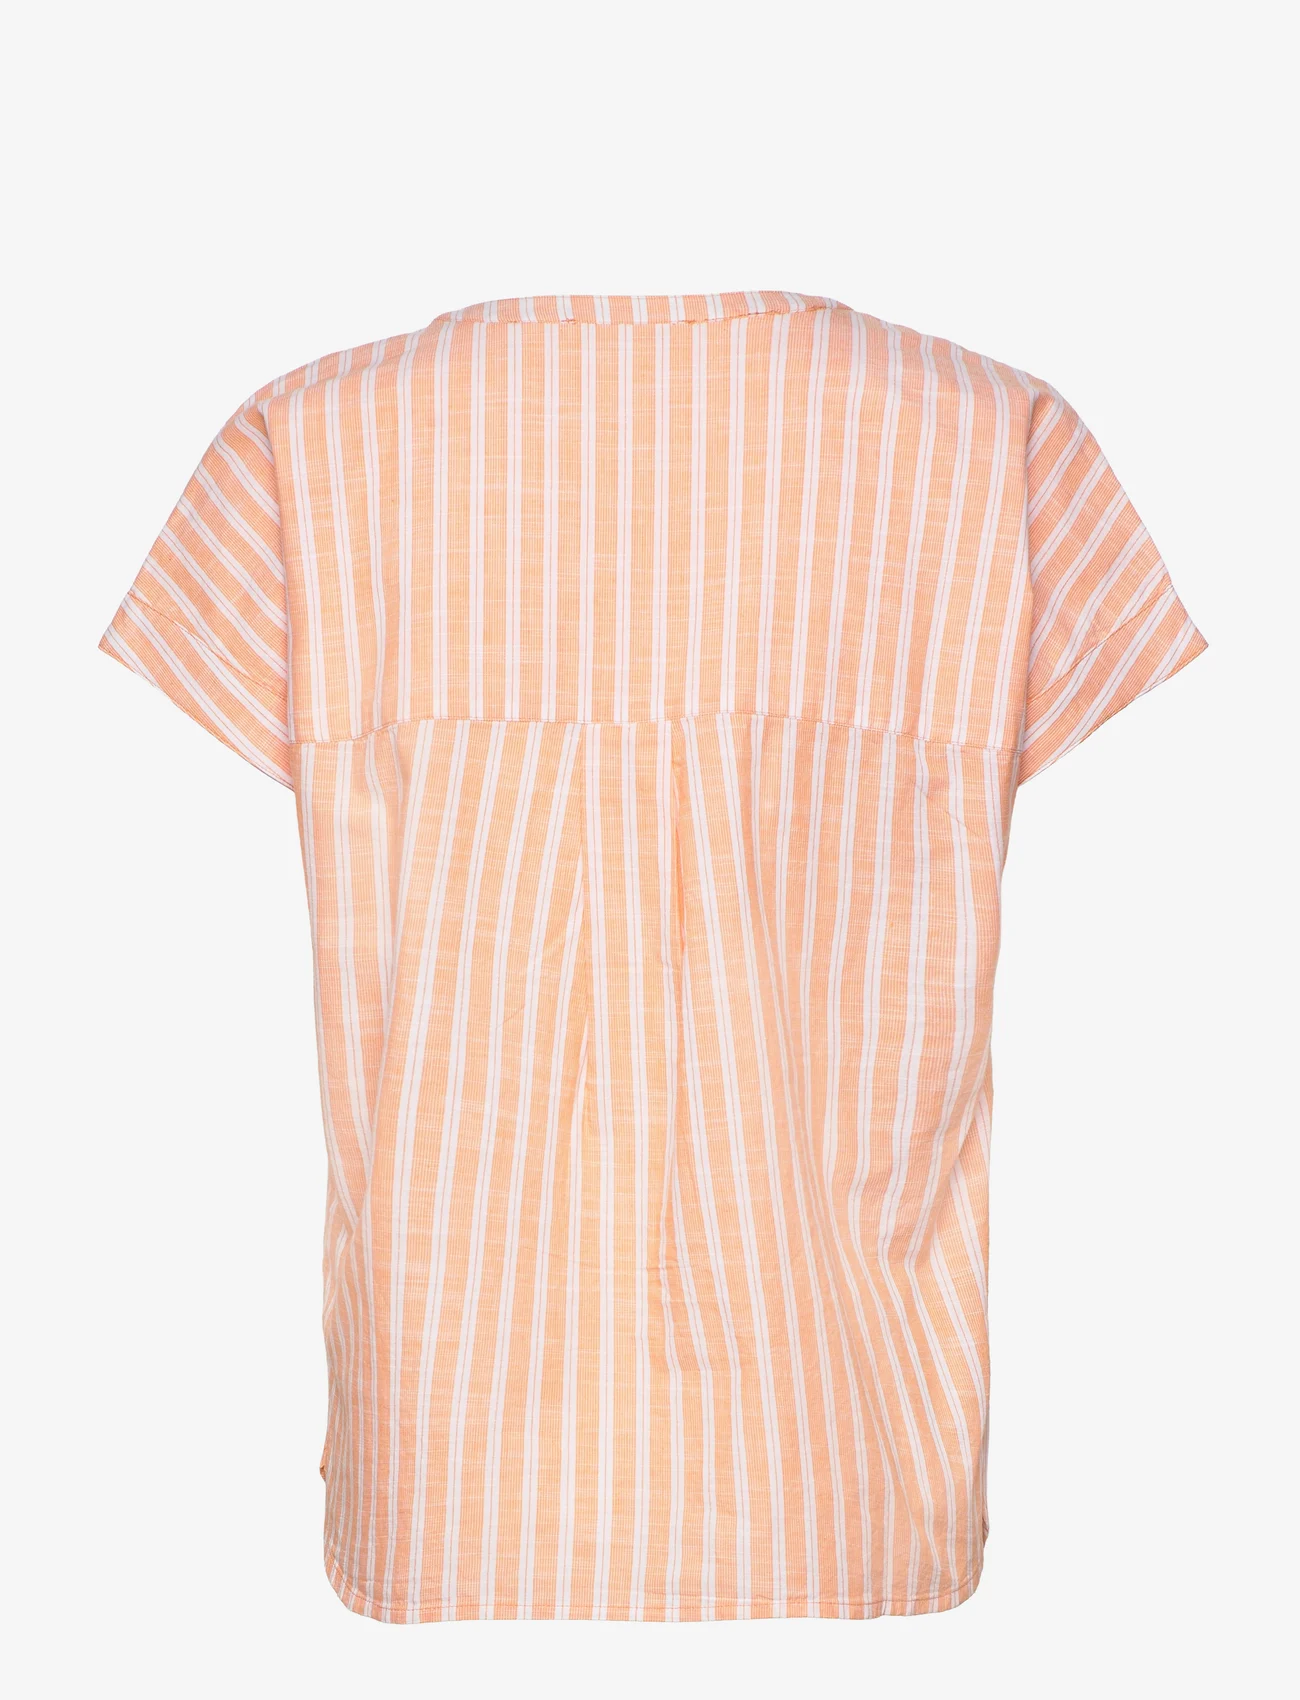 Esprit Casual - Striped cotton blouse - blouses korte mouwen - orange 3 - 1